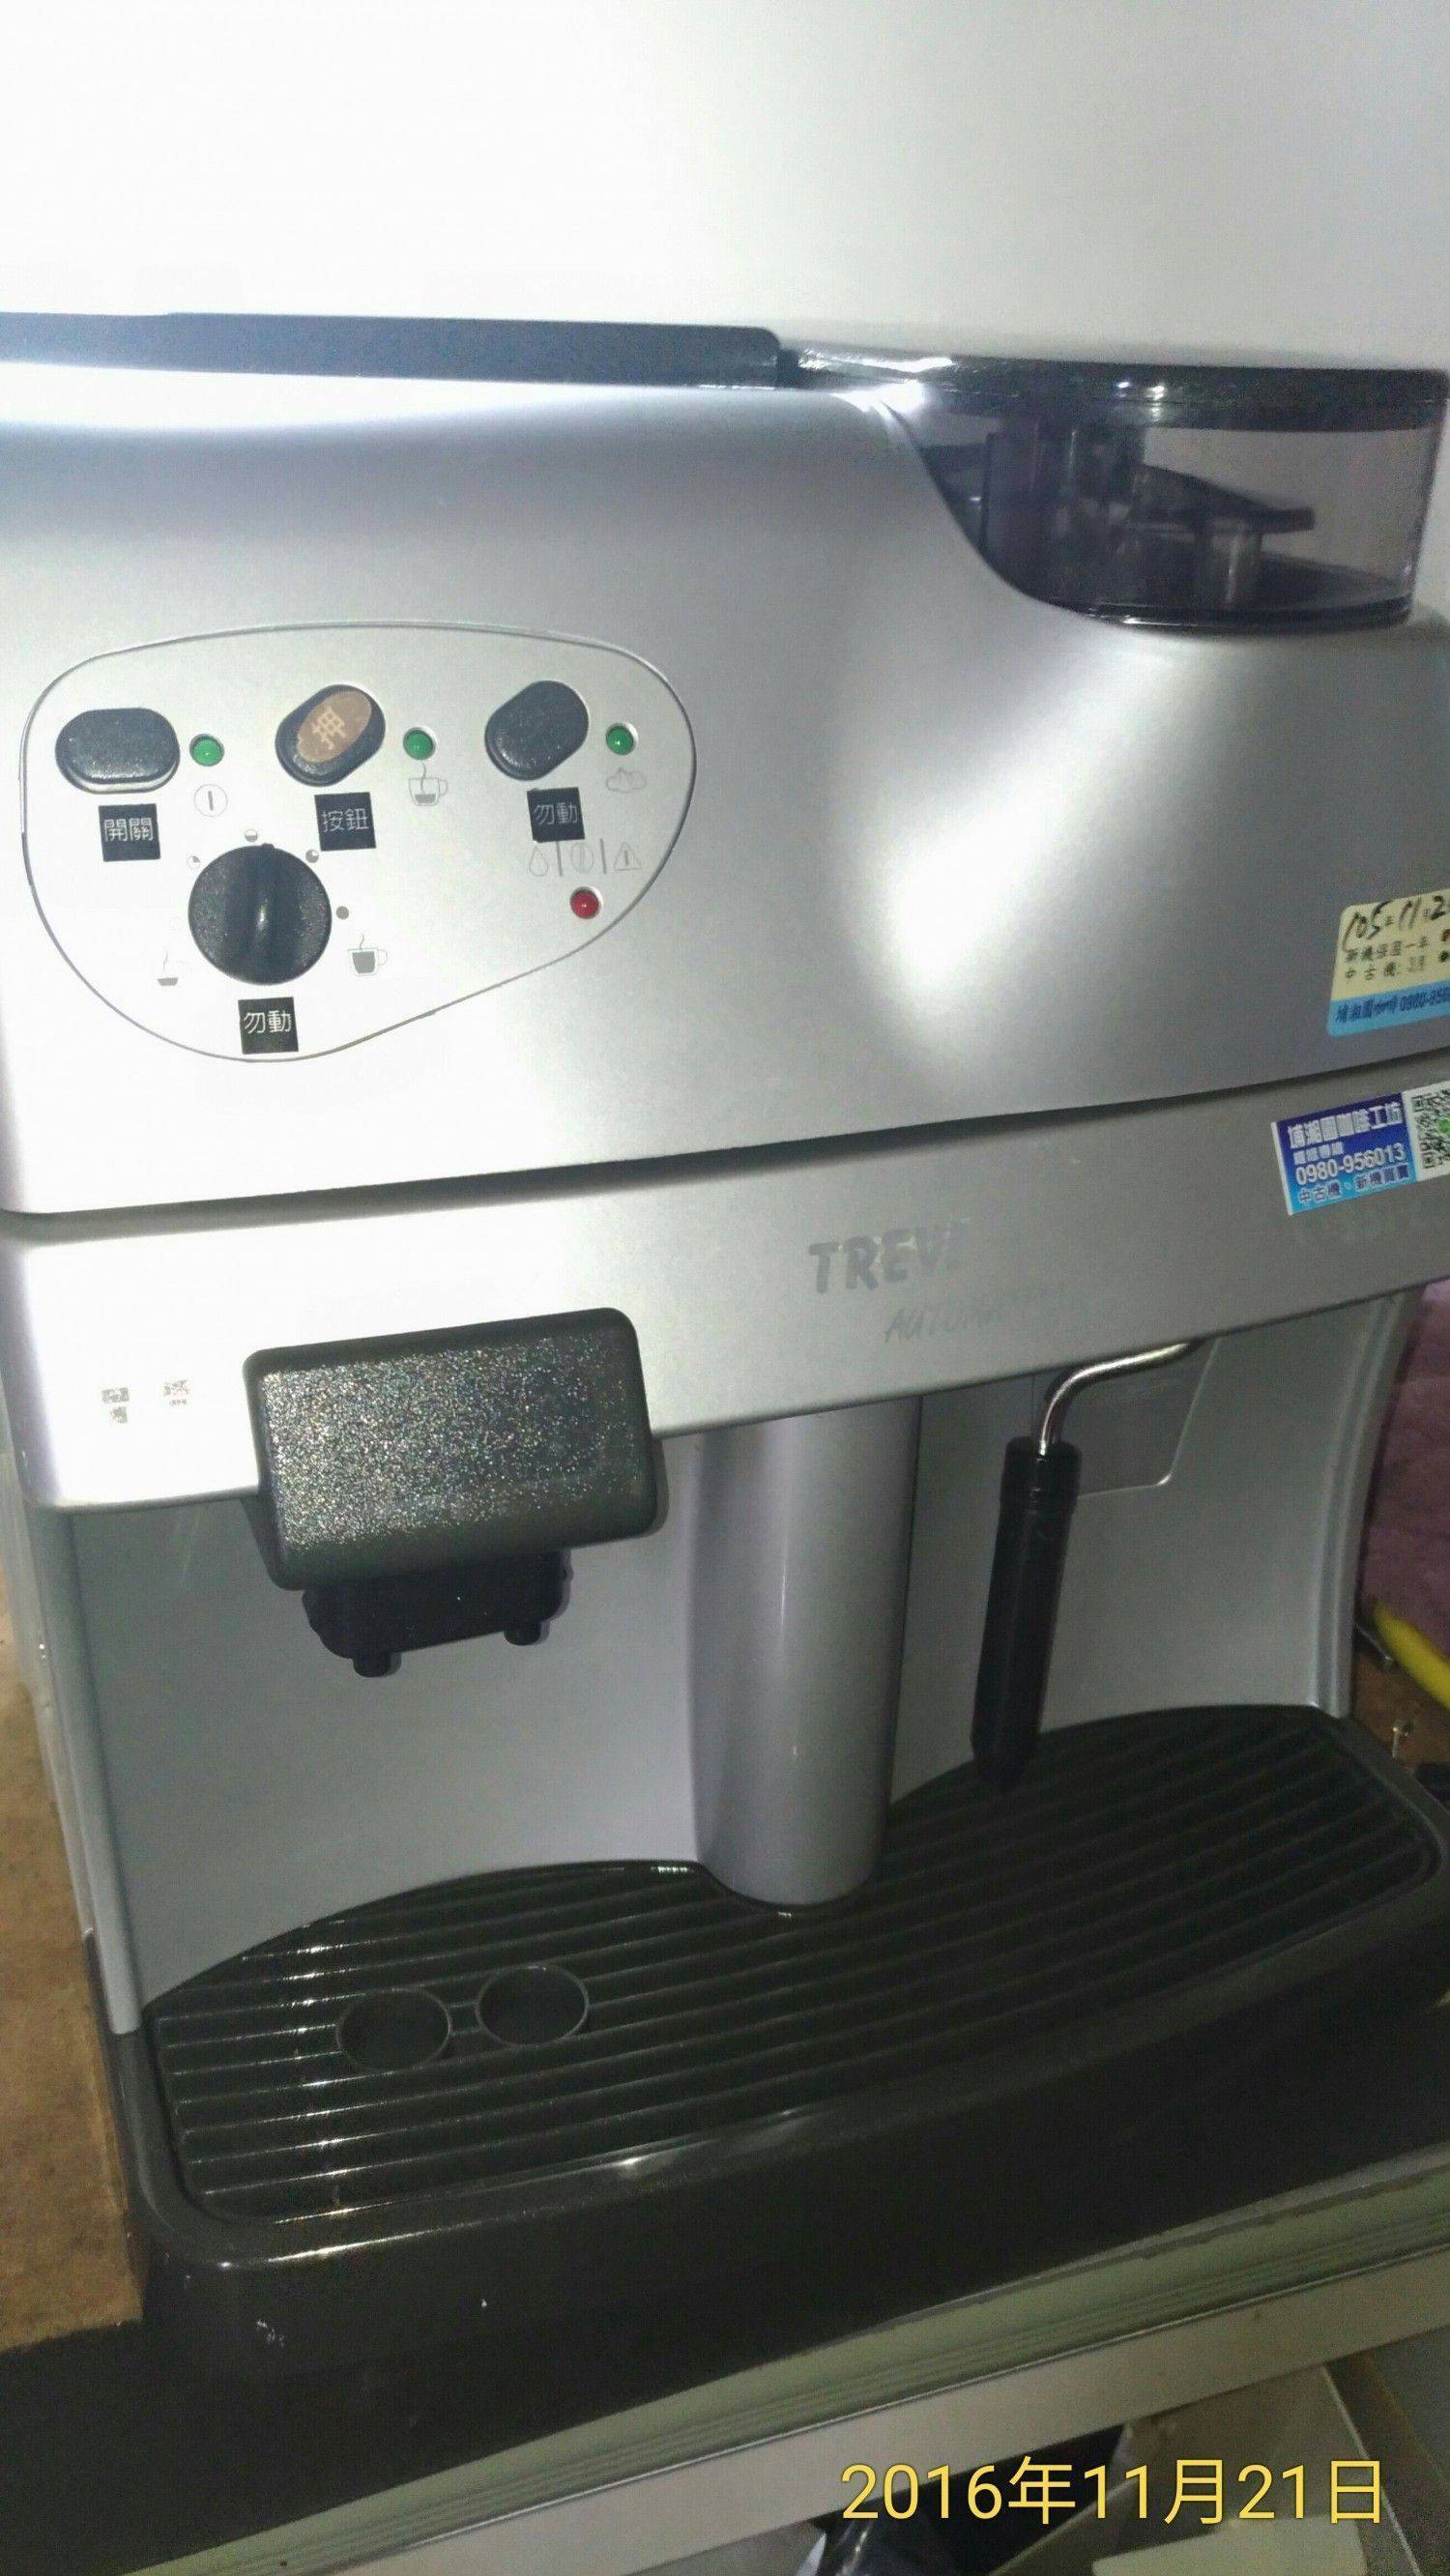 saeco-trevl全自動咖啡機 中古機